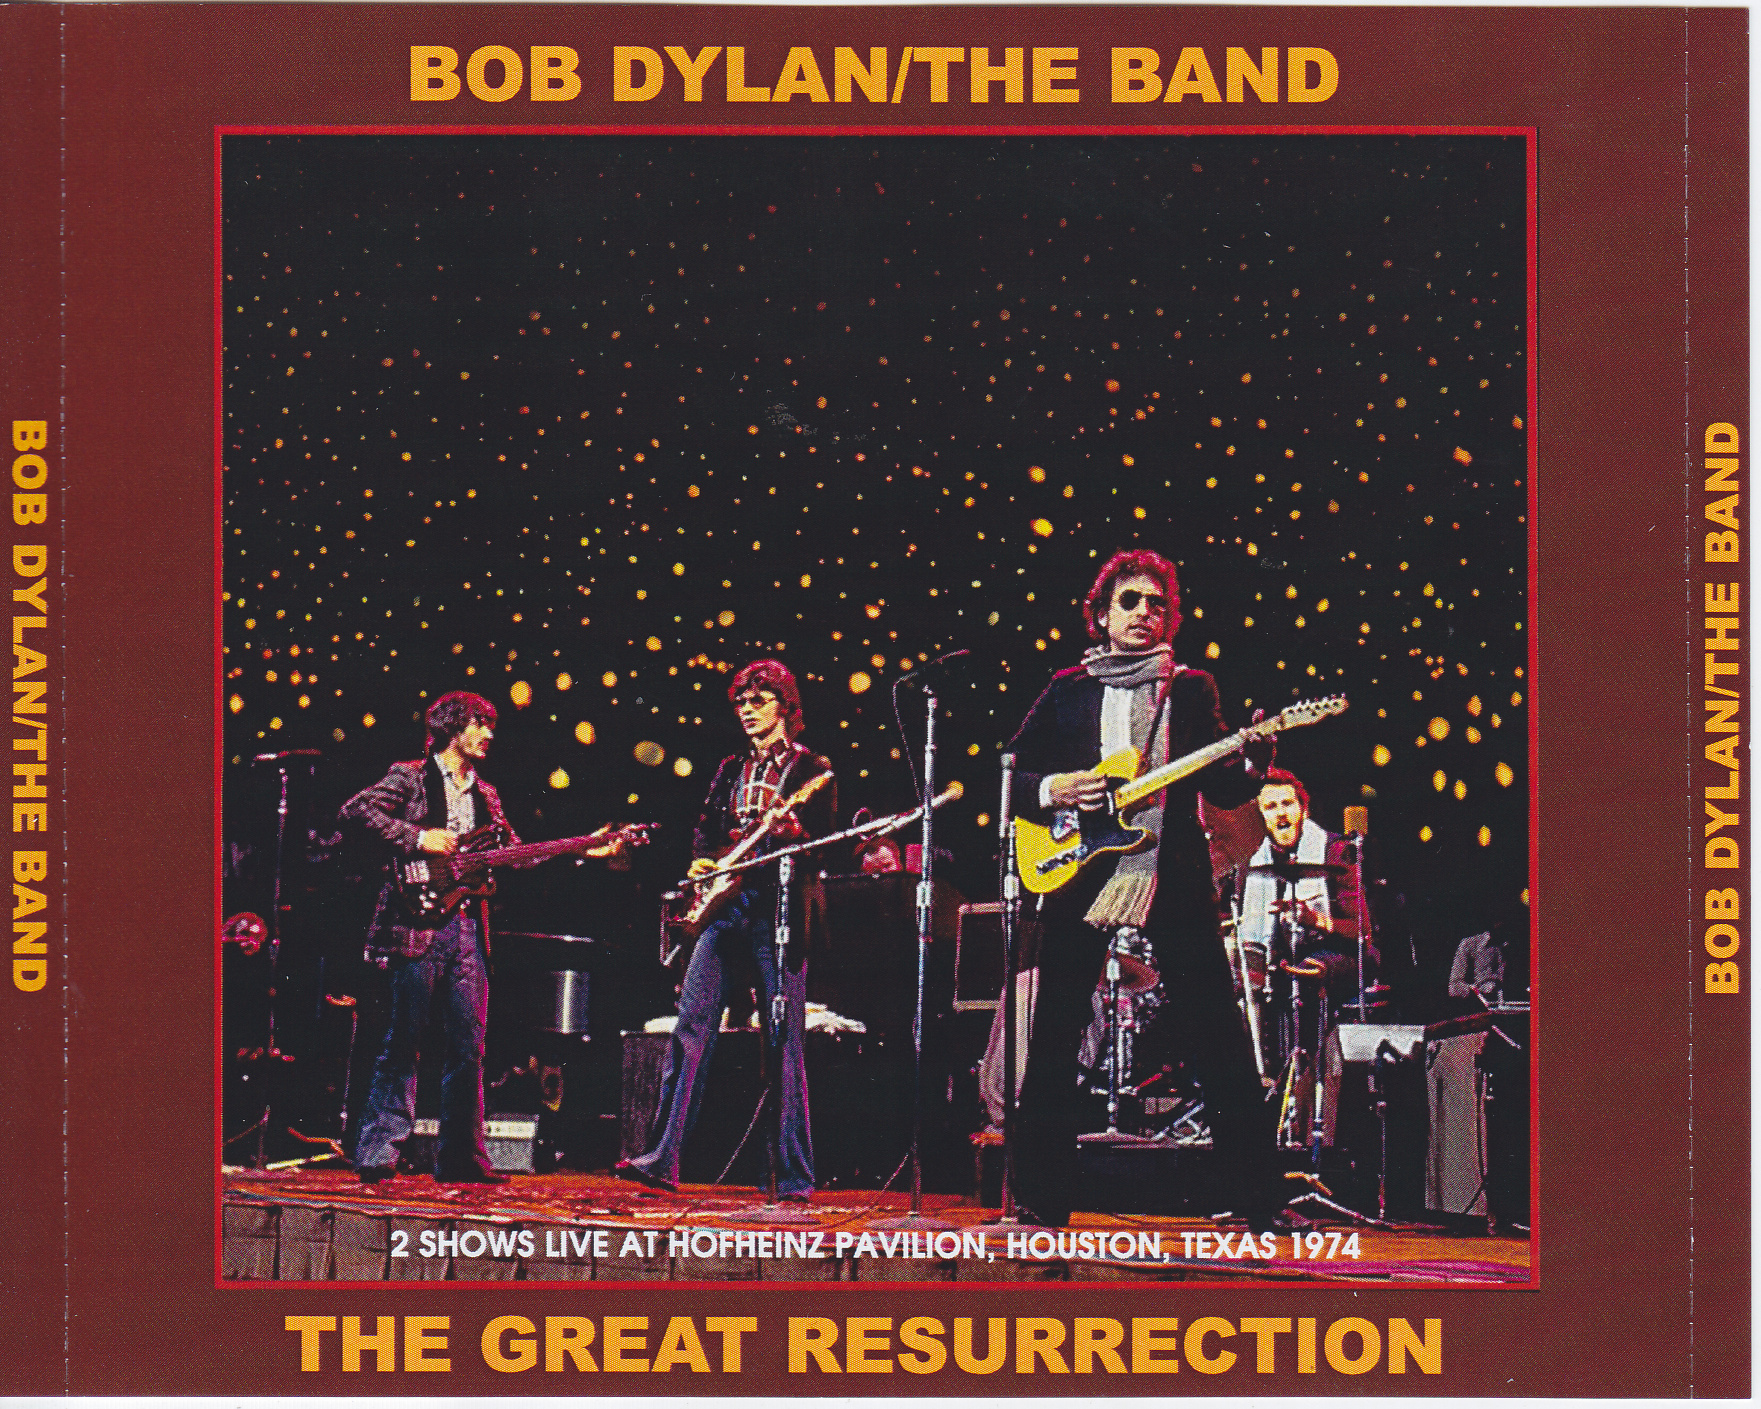 Bob Dylan u0026 The Band / The Great Resurrection / 4CDR – GiGinJapan